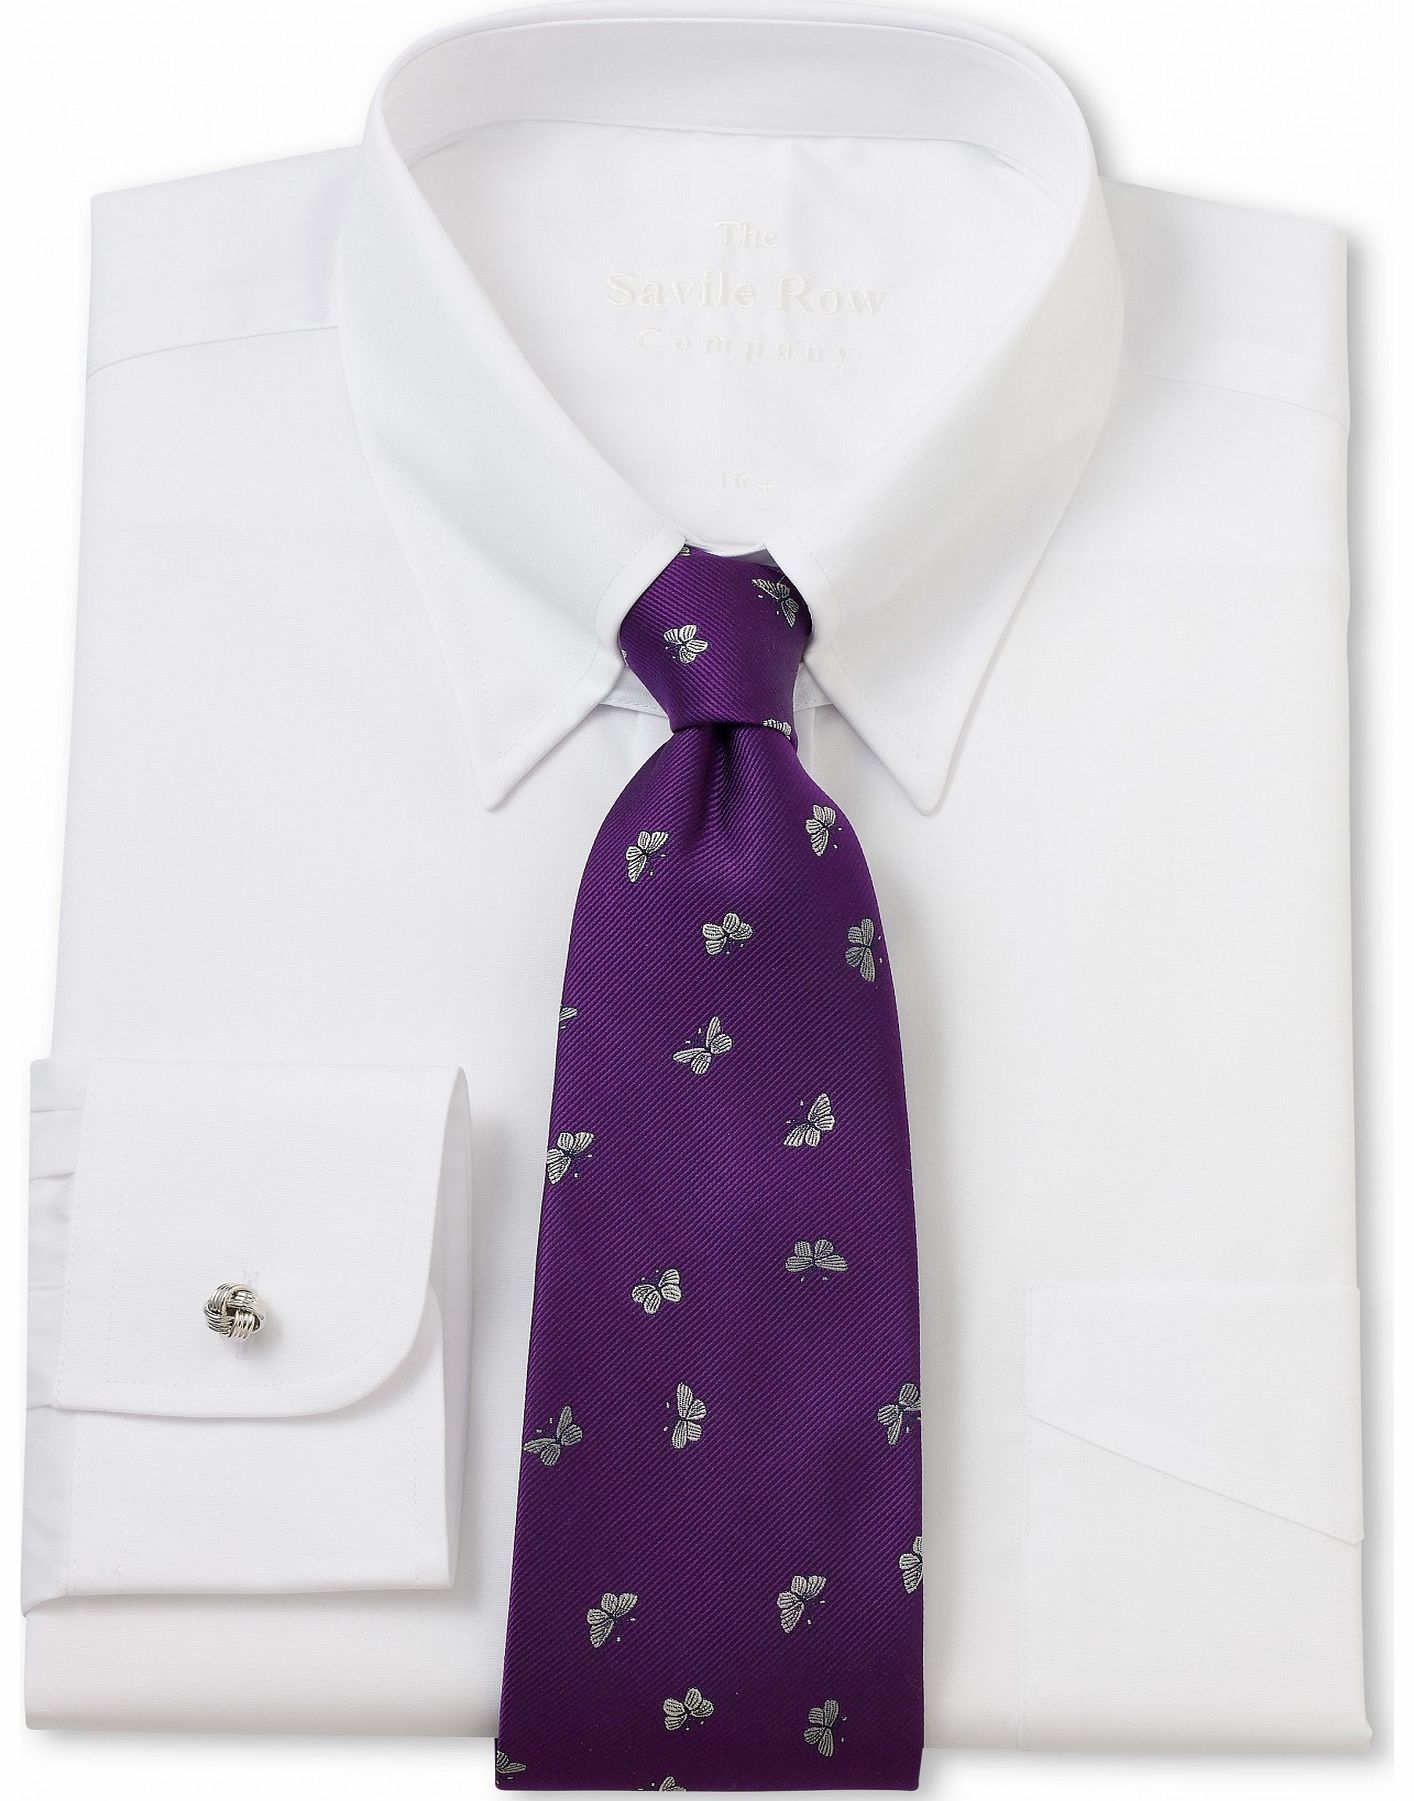 Savile Row Company White Poplin Tab Collar Classic Fit Shirt 19